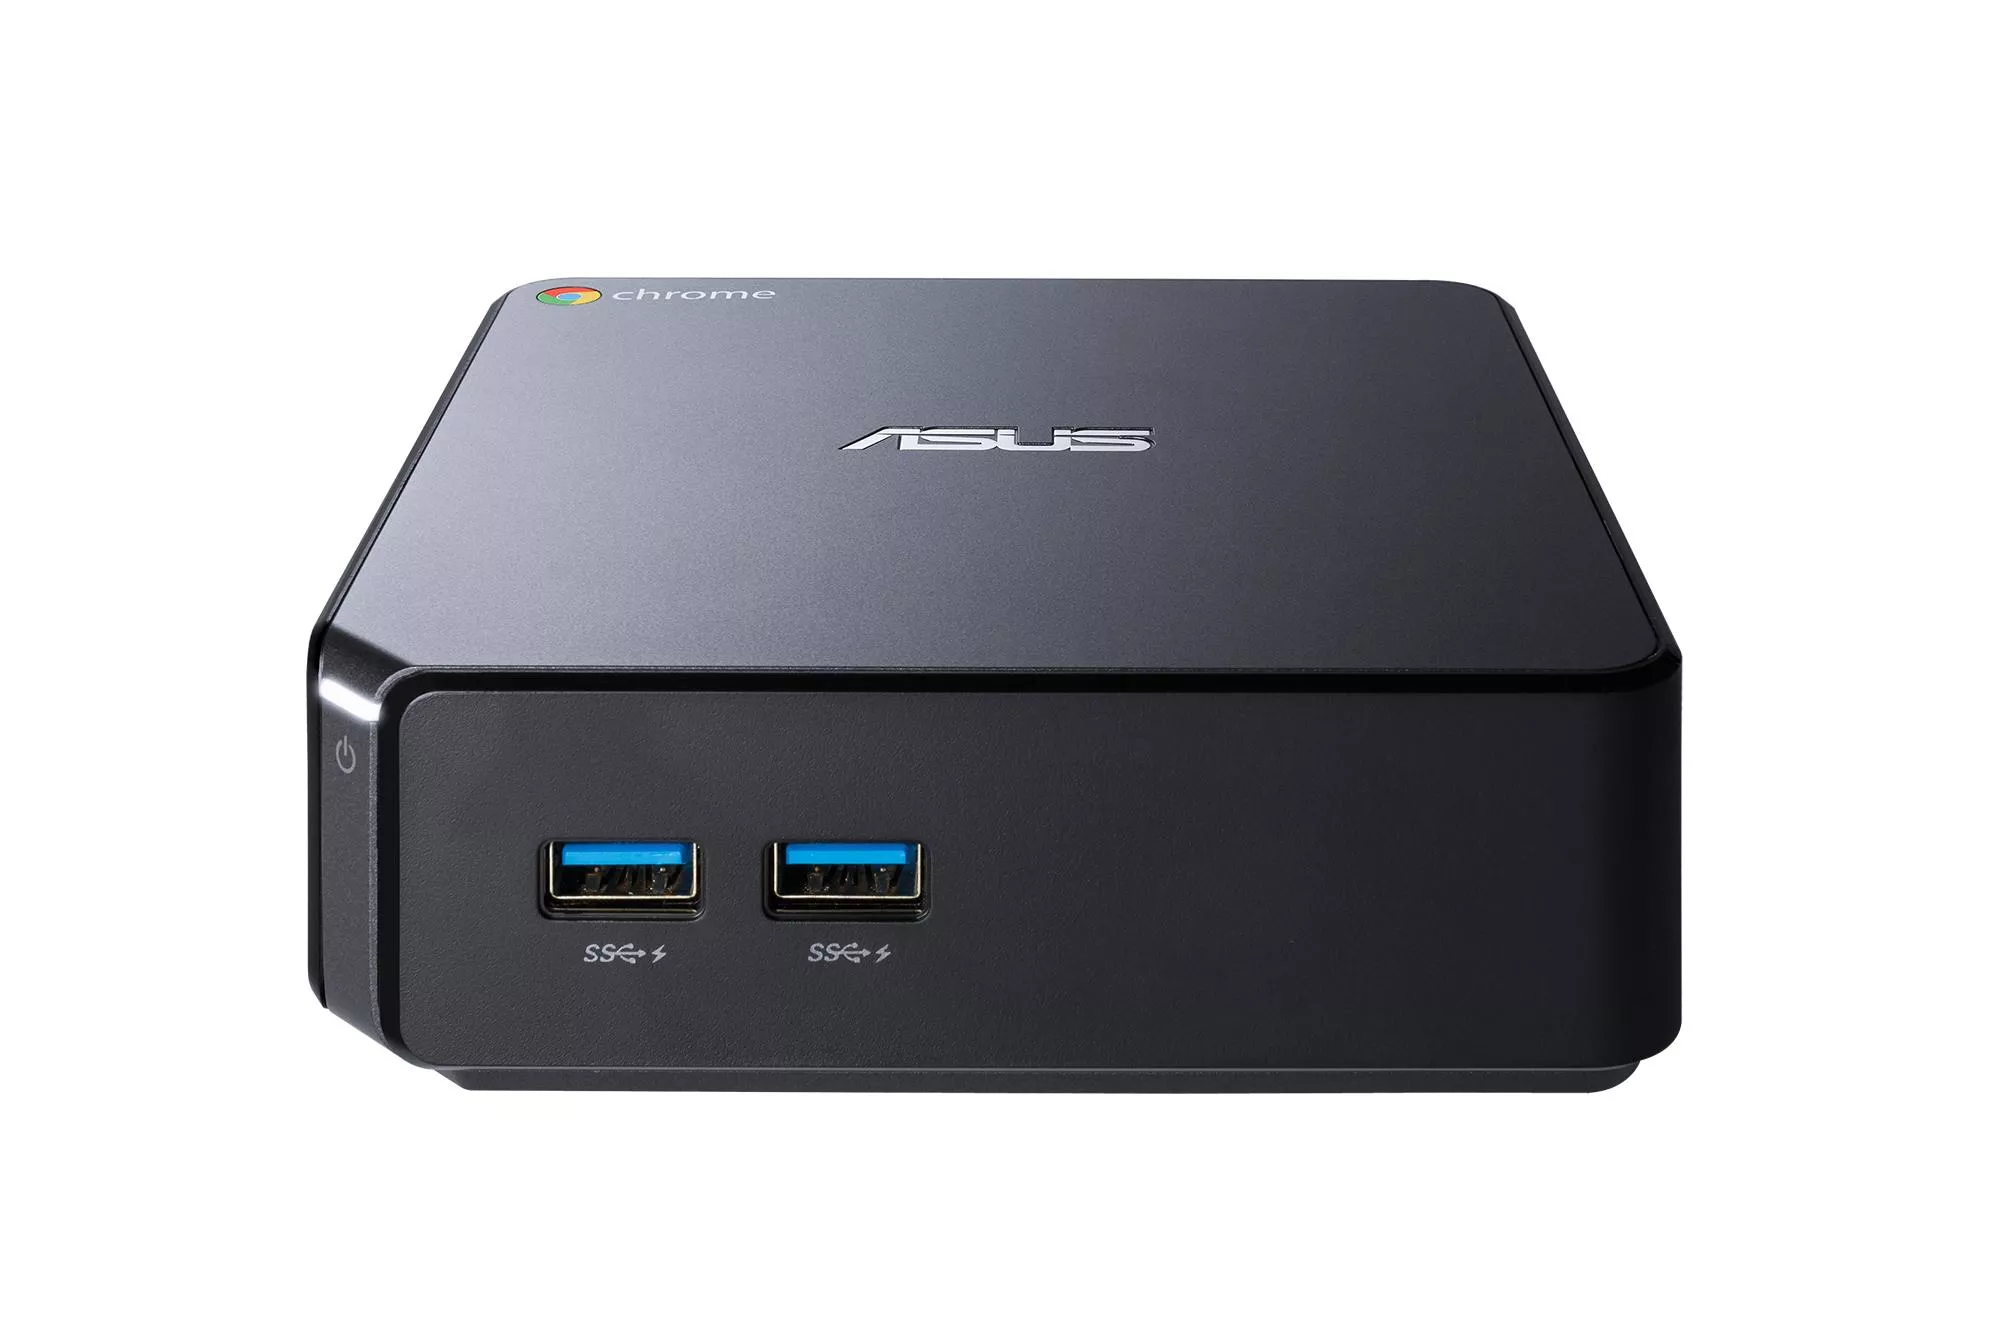 Vente ASUS CHROMEBOX 3-N007U Celeron 3865U 2x2GB RAM ASUS au meilleur prix - visuel 2